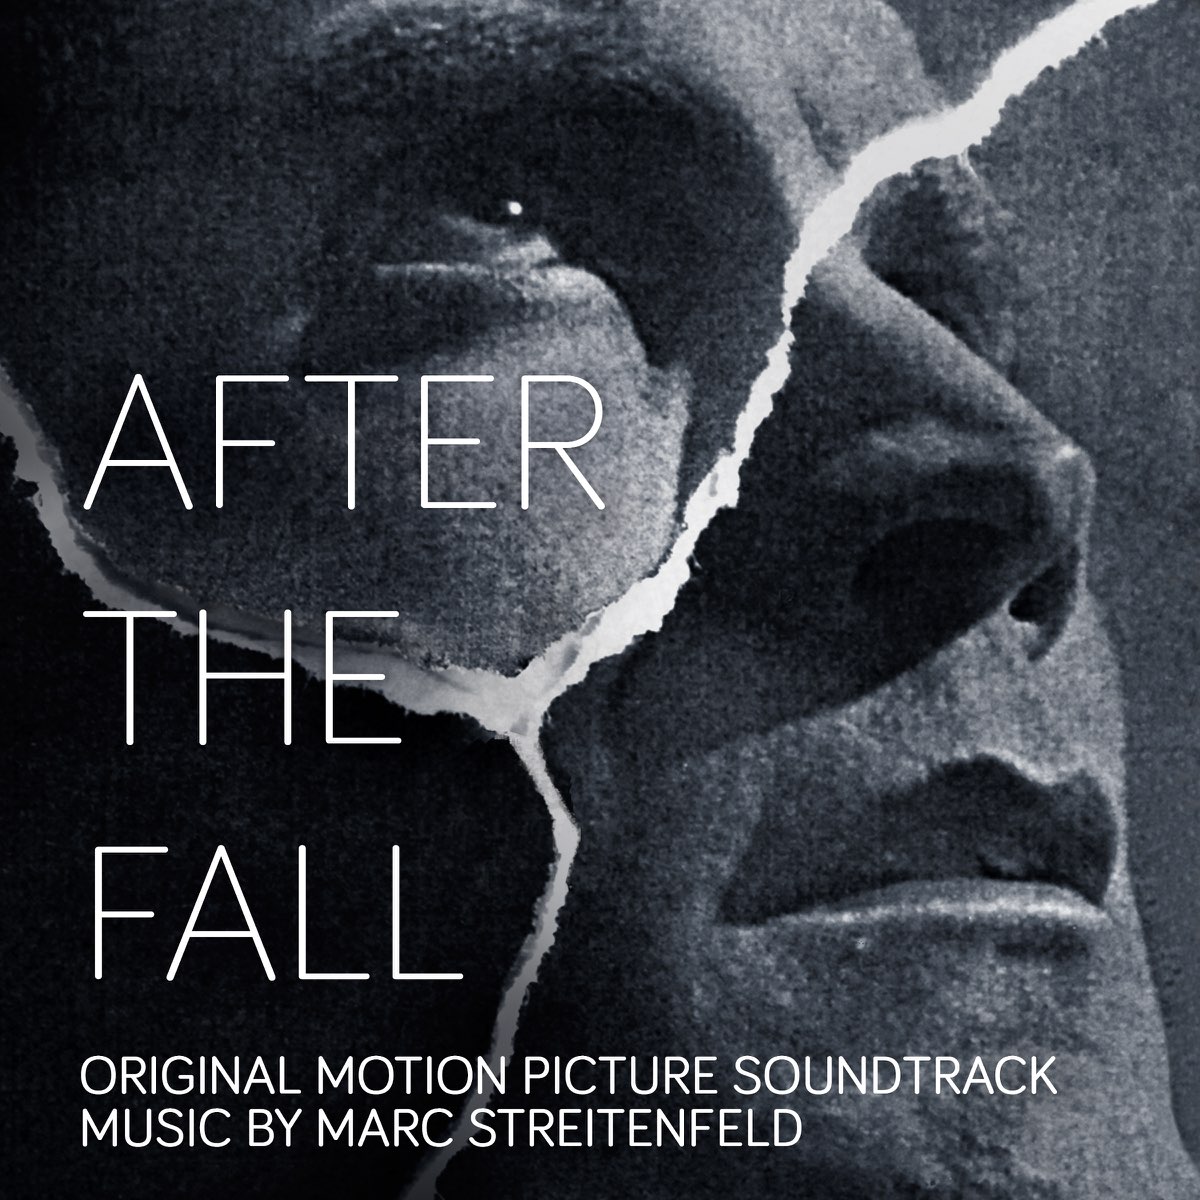 Marc Streitenfeld. Soundtrack the after. Fall soundtrack